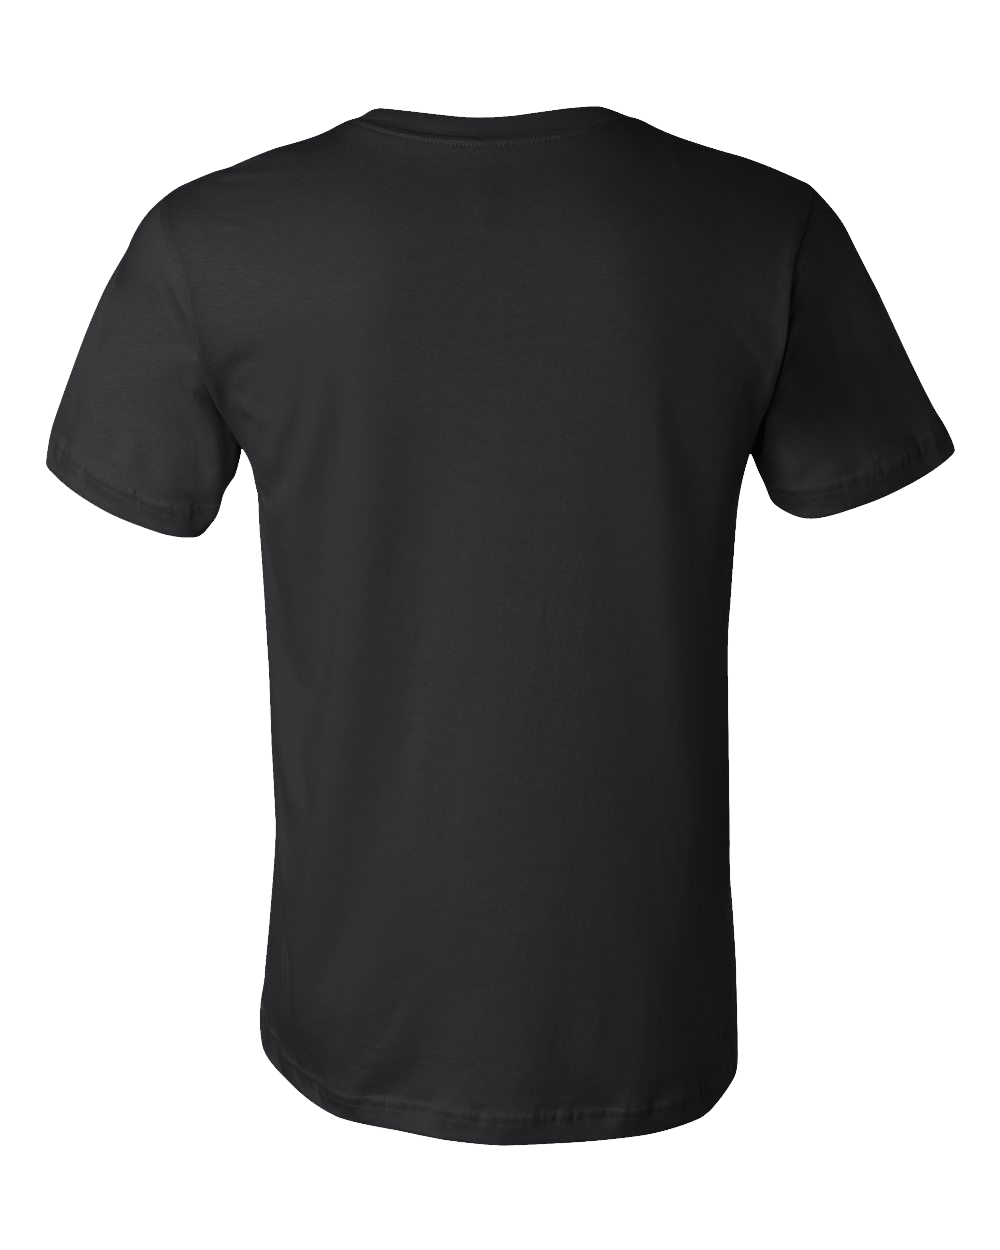 Standard Black Lavaca, AR | Retro, Vintage Style Arkansas Pride  T-shirt